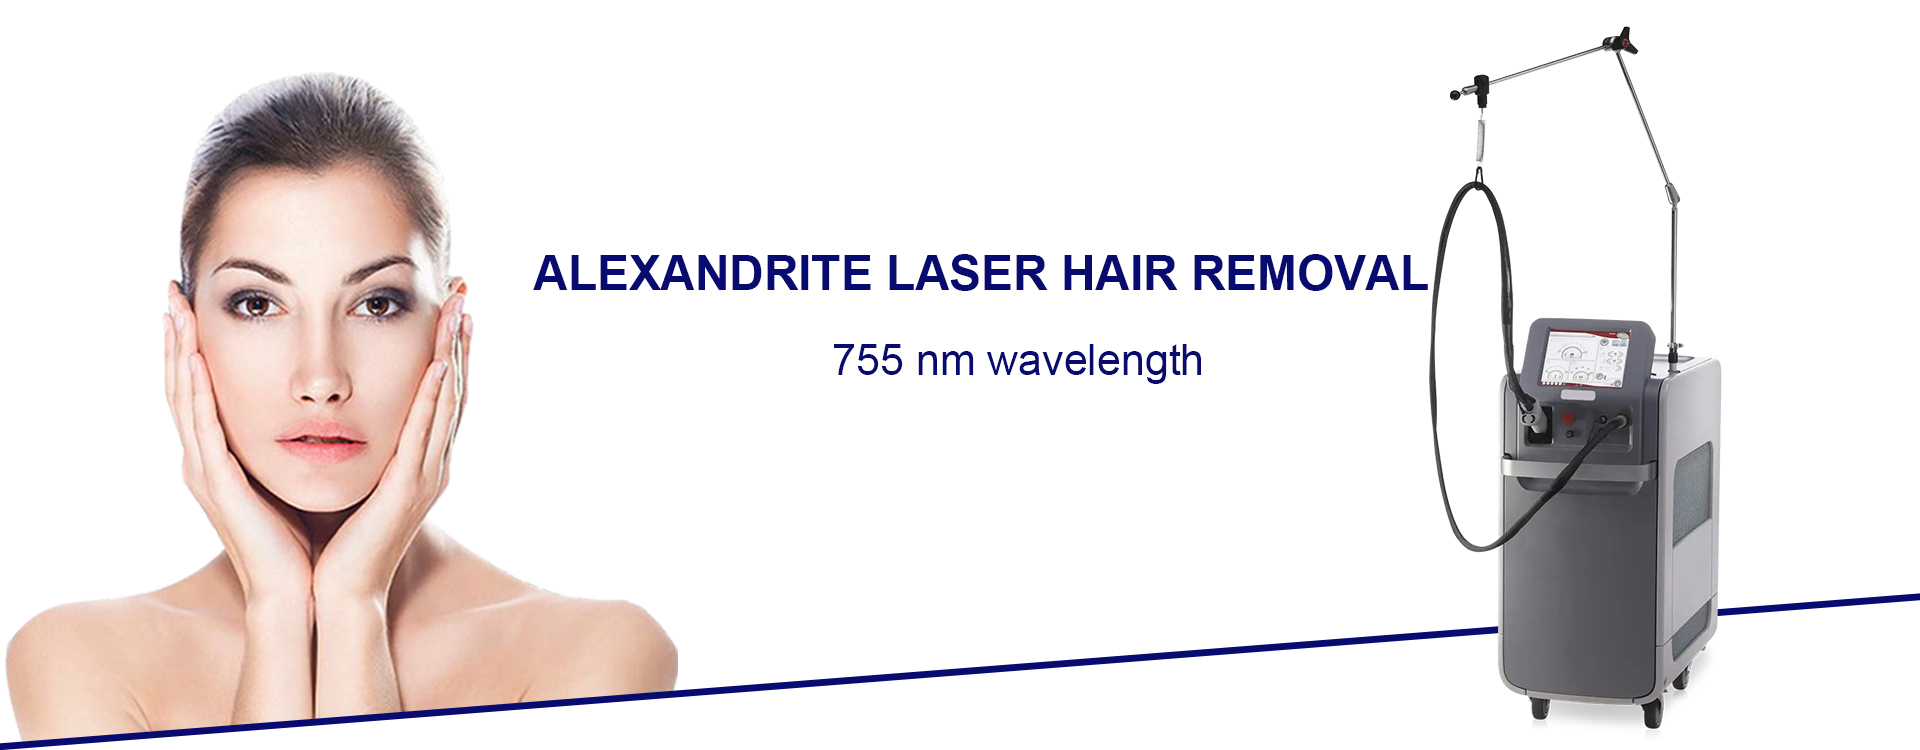 Bloeien Lil draai 755 nm wavelength] Alexandrite Laser Hair removal - Hair Removal |  PrettyLasers